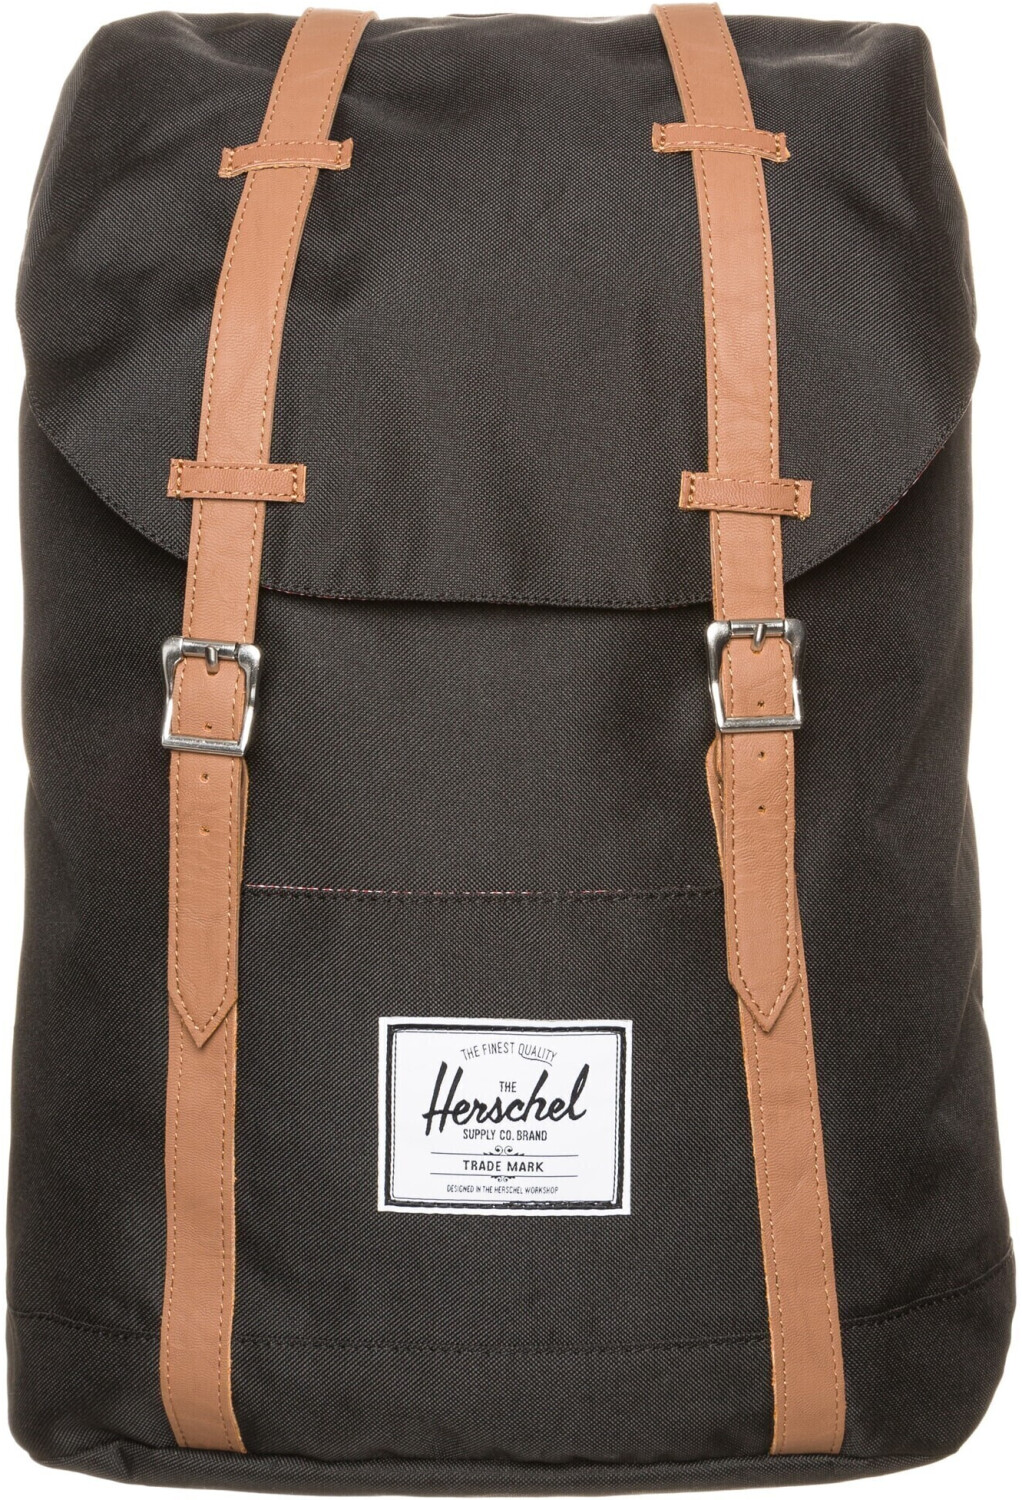 Herschel Retreat Backpack (2021) black/tan synthetic leather